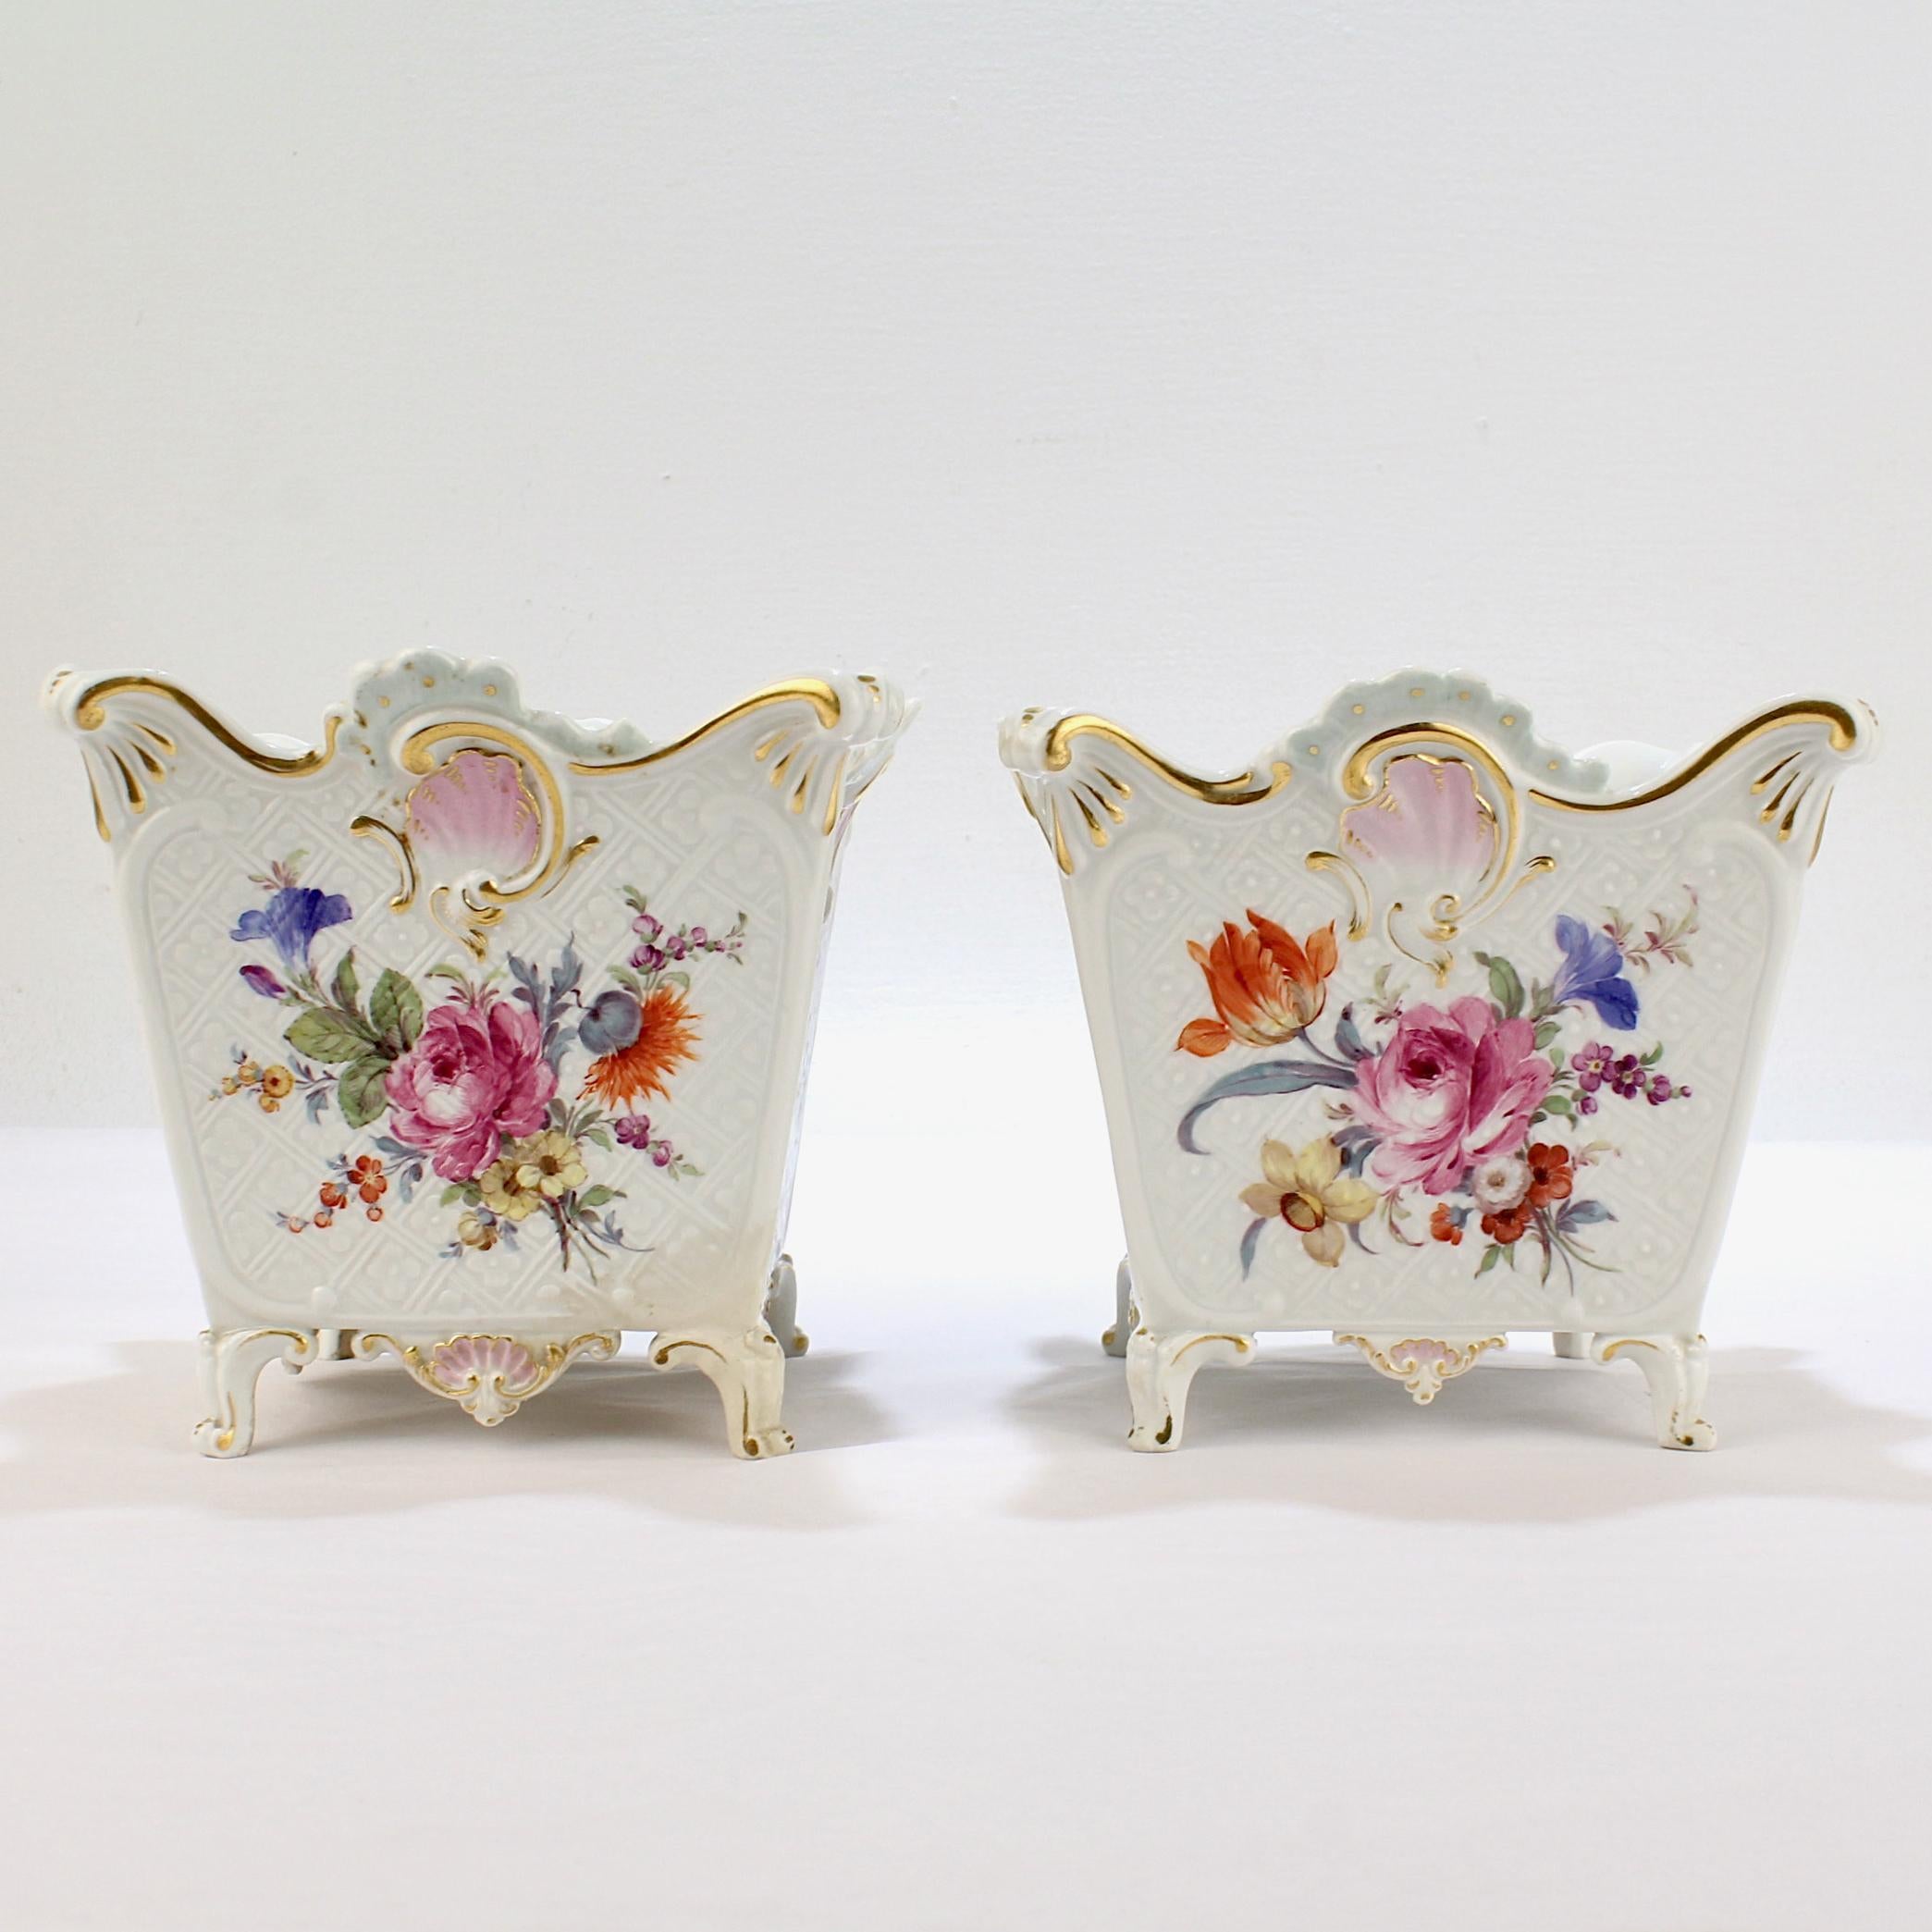 German Pair of Antique 19th Century Meissen Porcelain Cachepot or Jardinieres